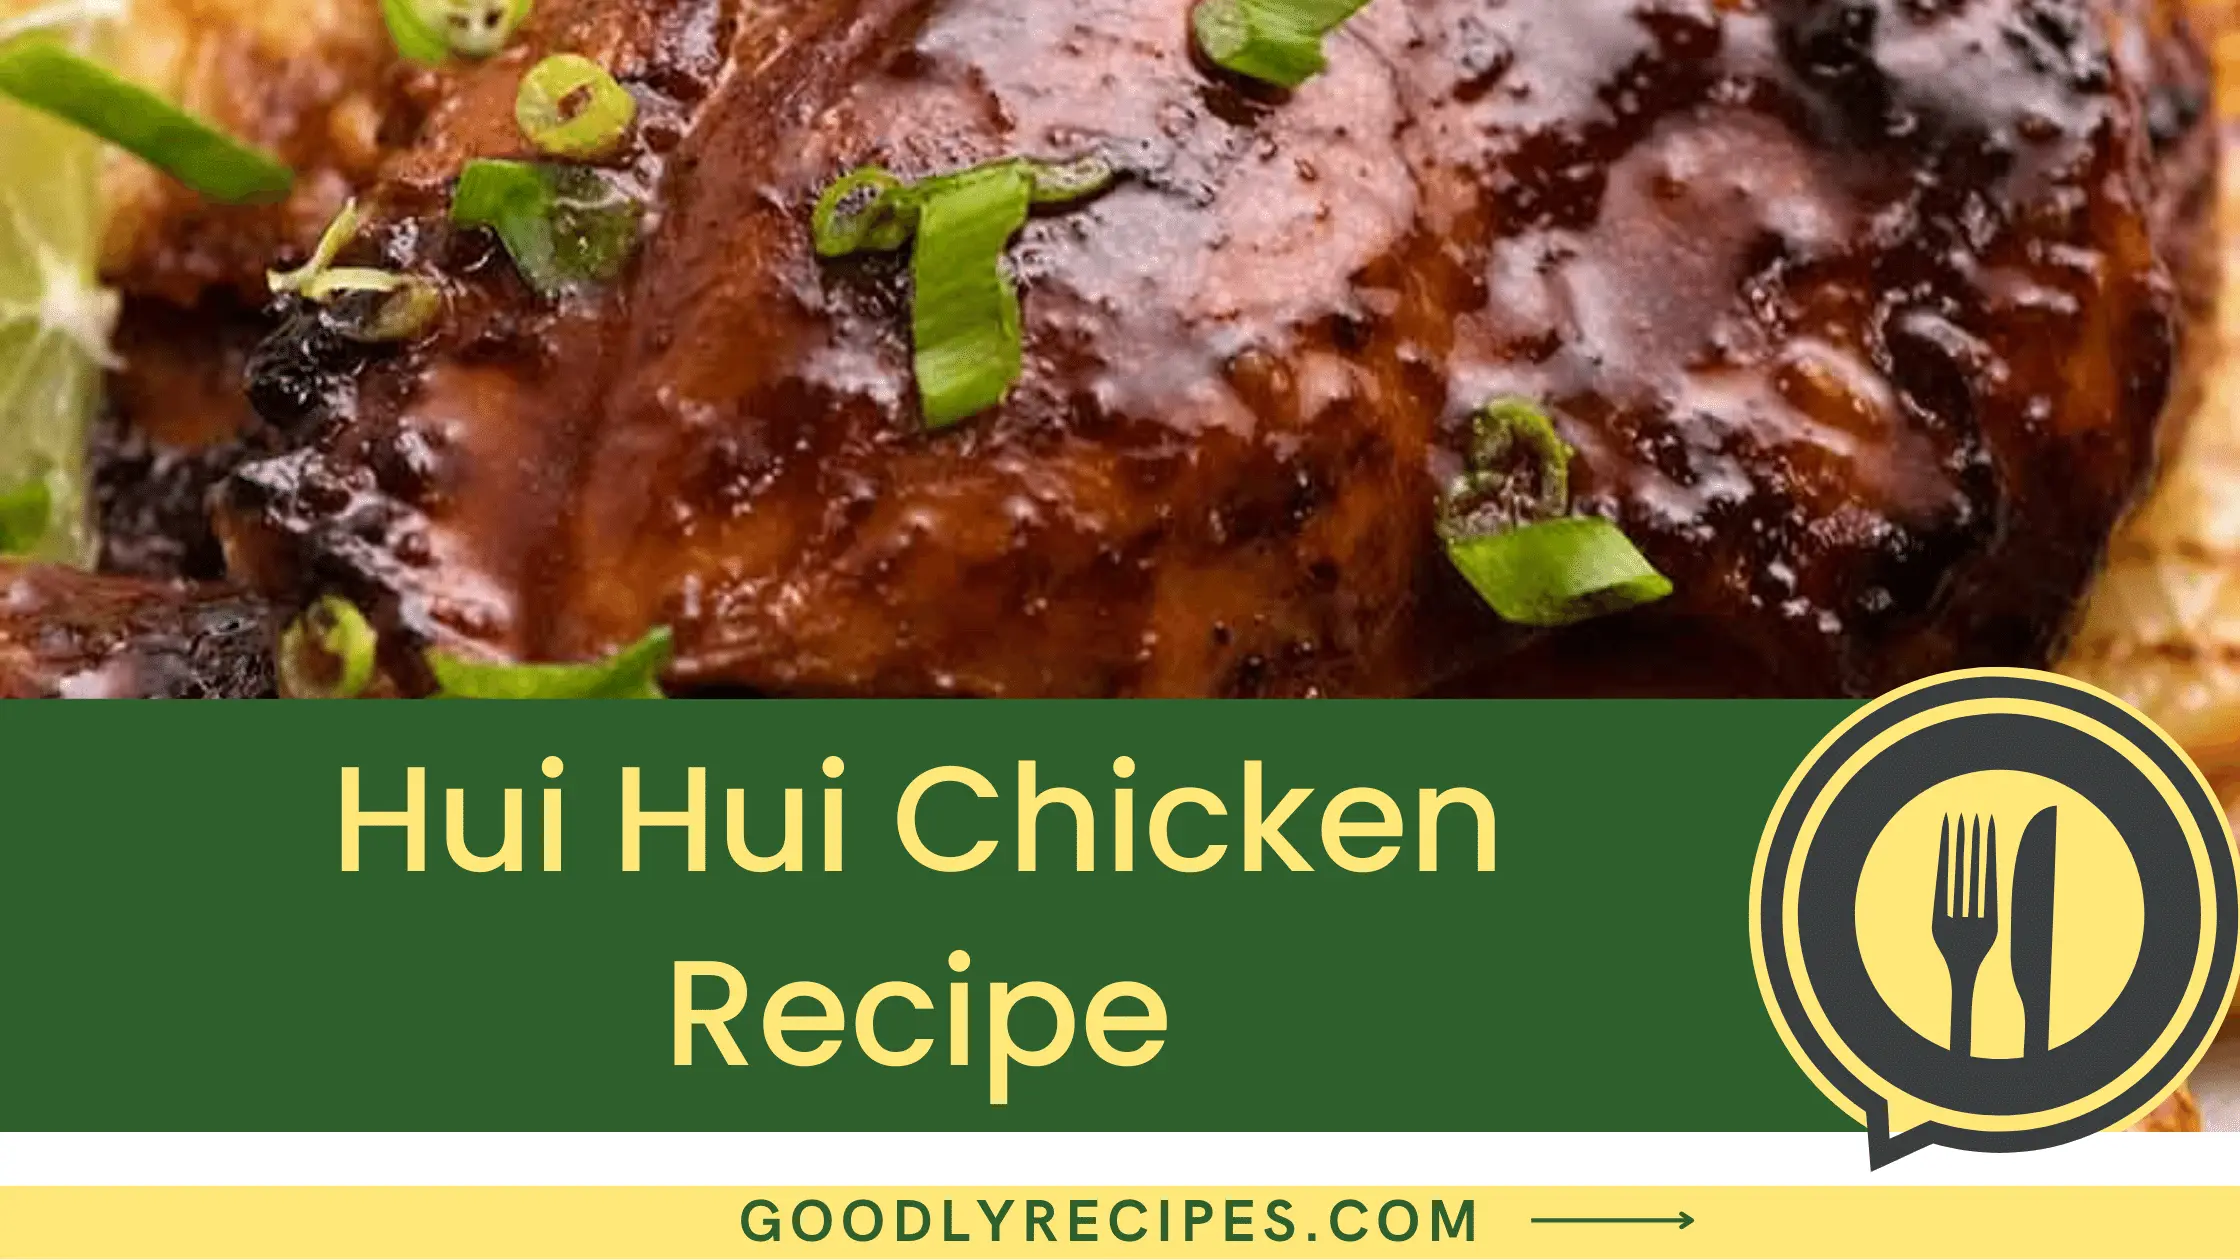 Hui Hui Chicken Recipe - For Food Lovers